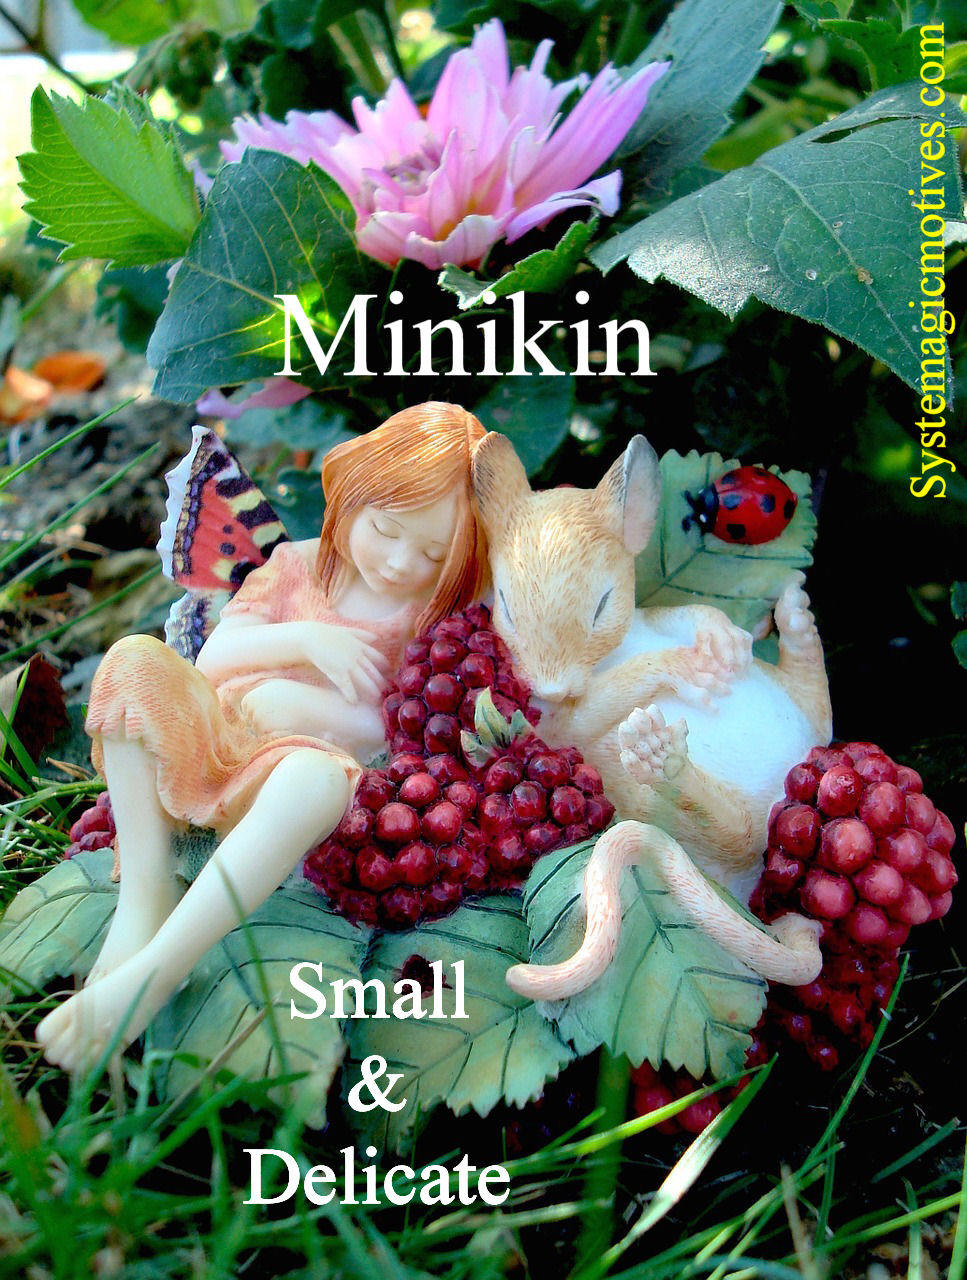 Graphic Definition of Minikin